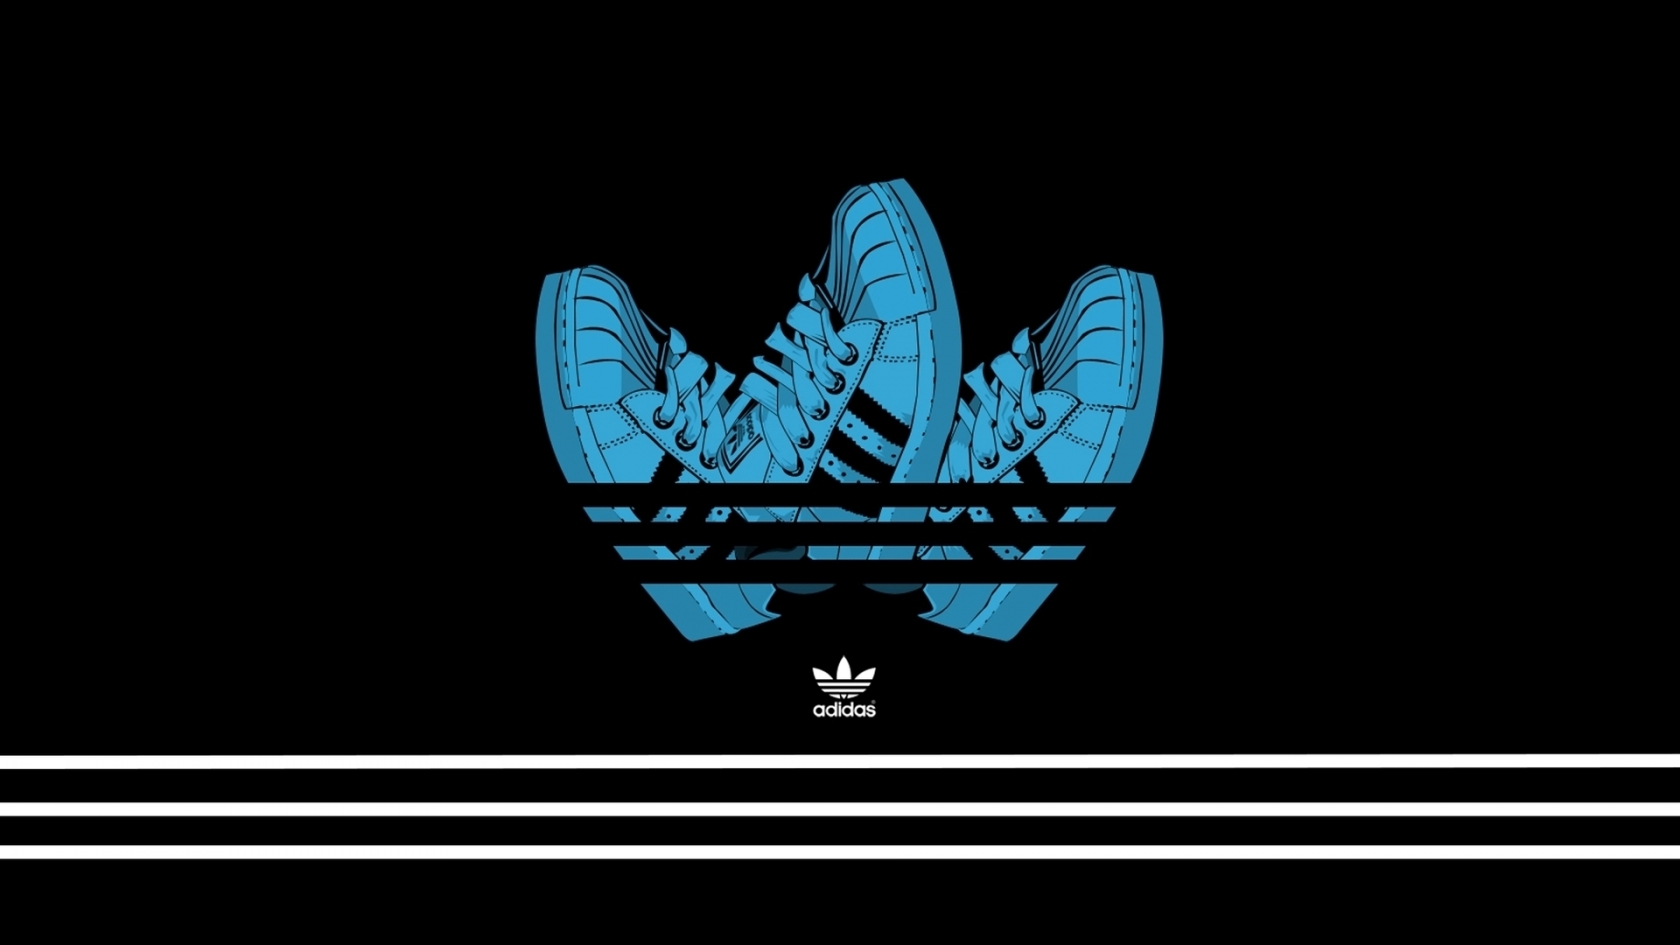 Adidas Creative Logo Design for 1680 x 945 HDTV resolution